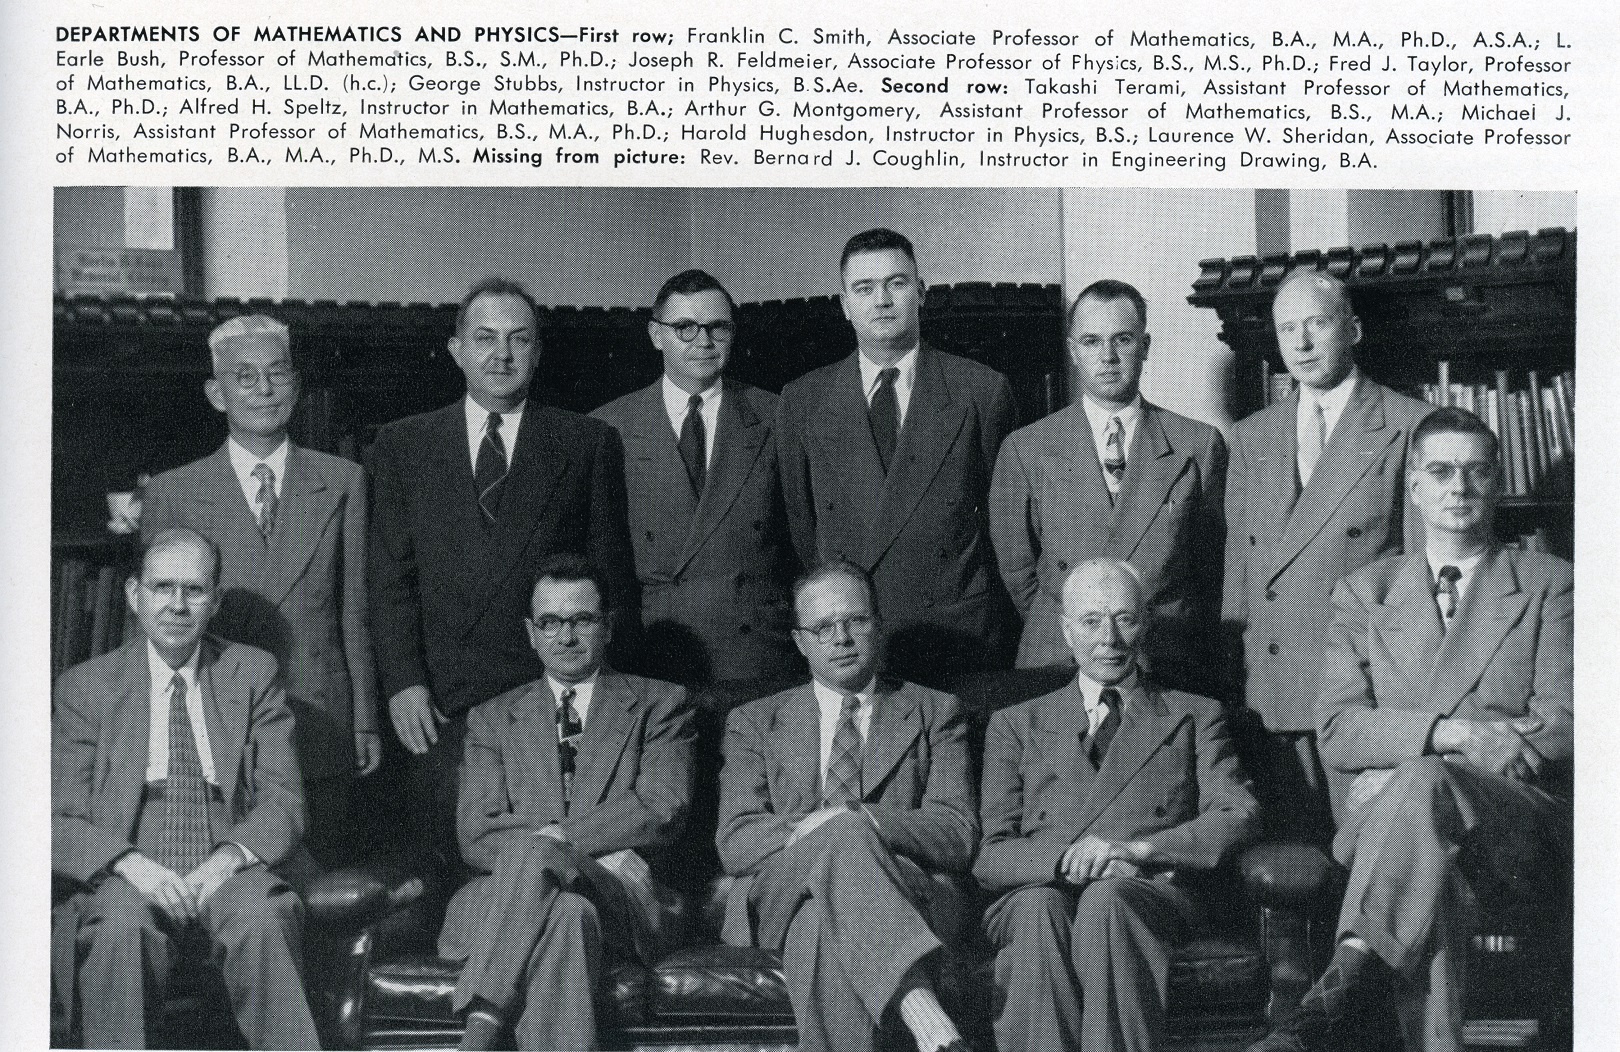 St. Thomas Mathematics Department 1952.